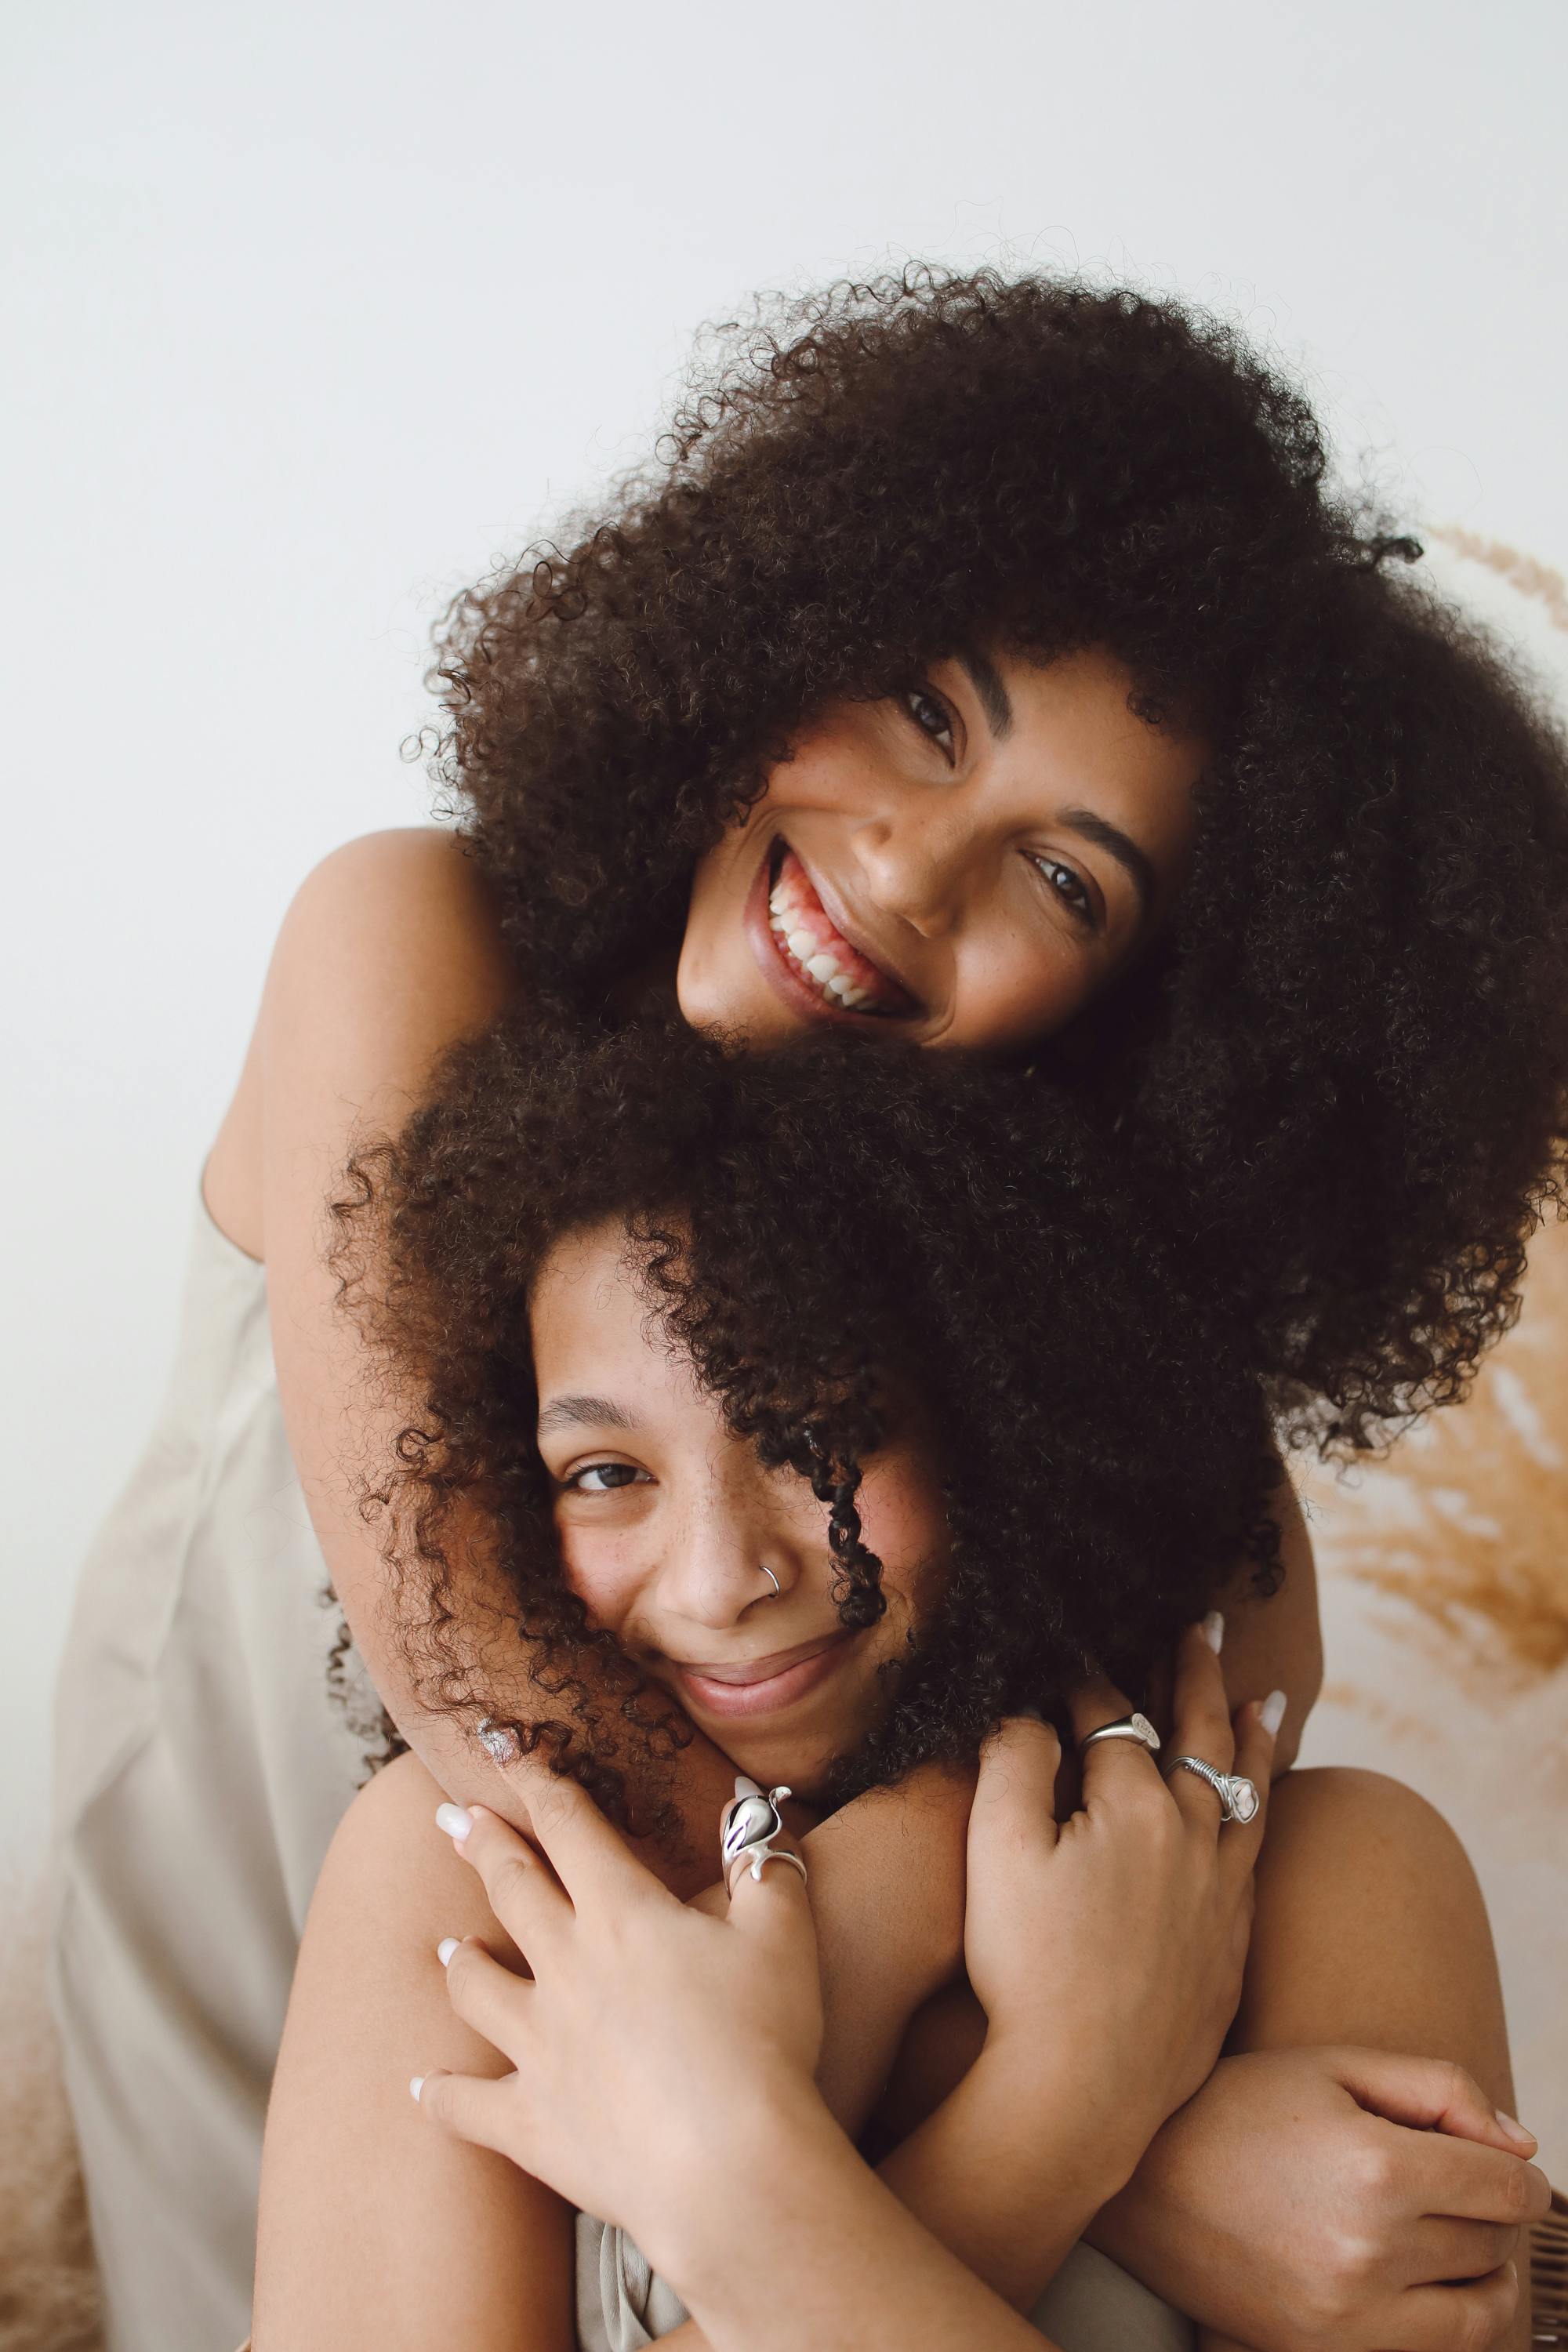 Two happy women embracing | Source: Pexels